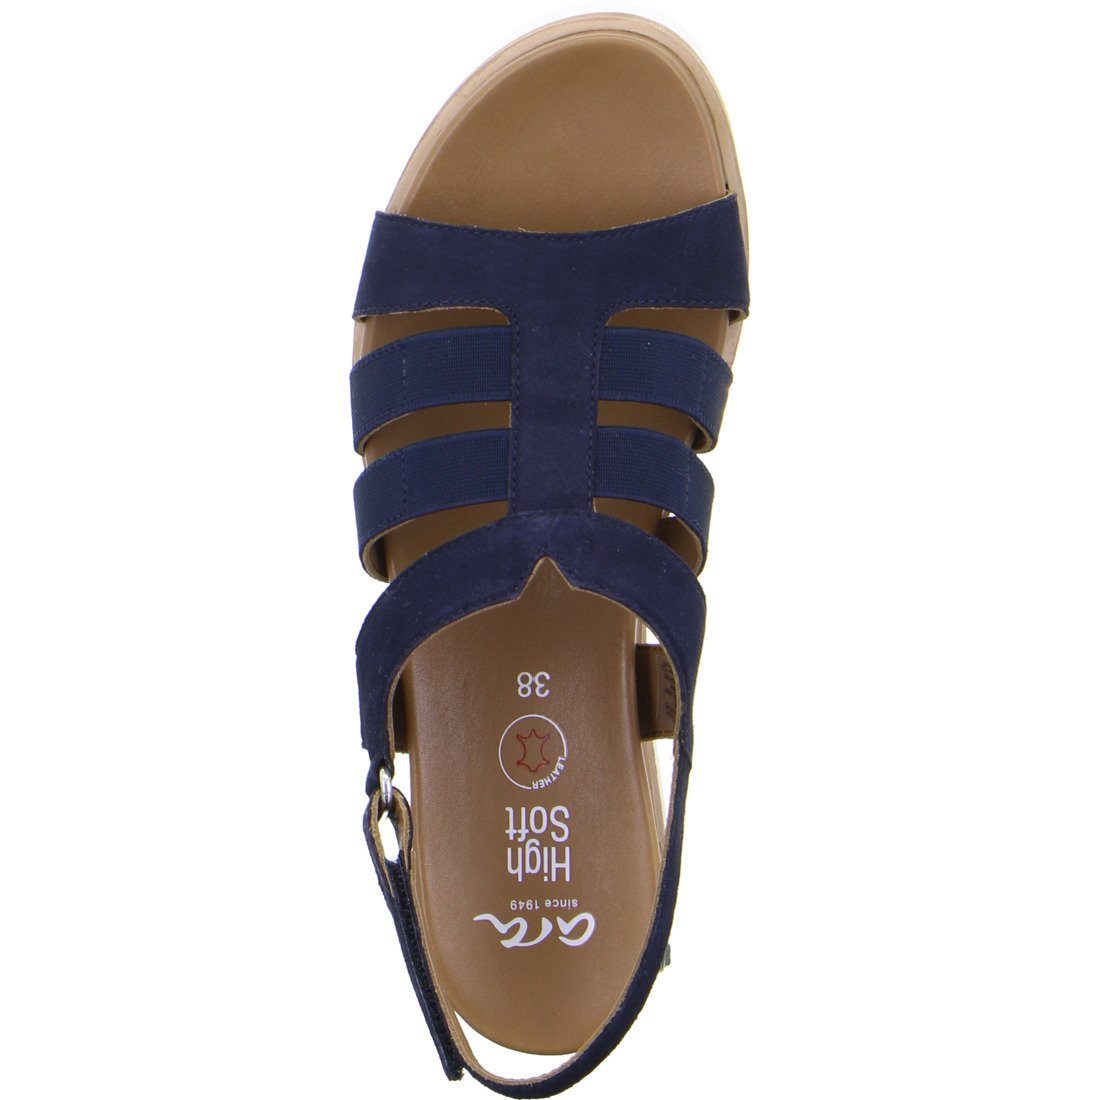 Ara Ara Schuhe, Sandalette Sandalette blau 045296 - Rauleder Valencia